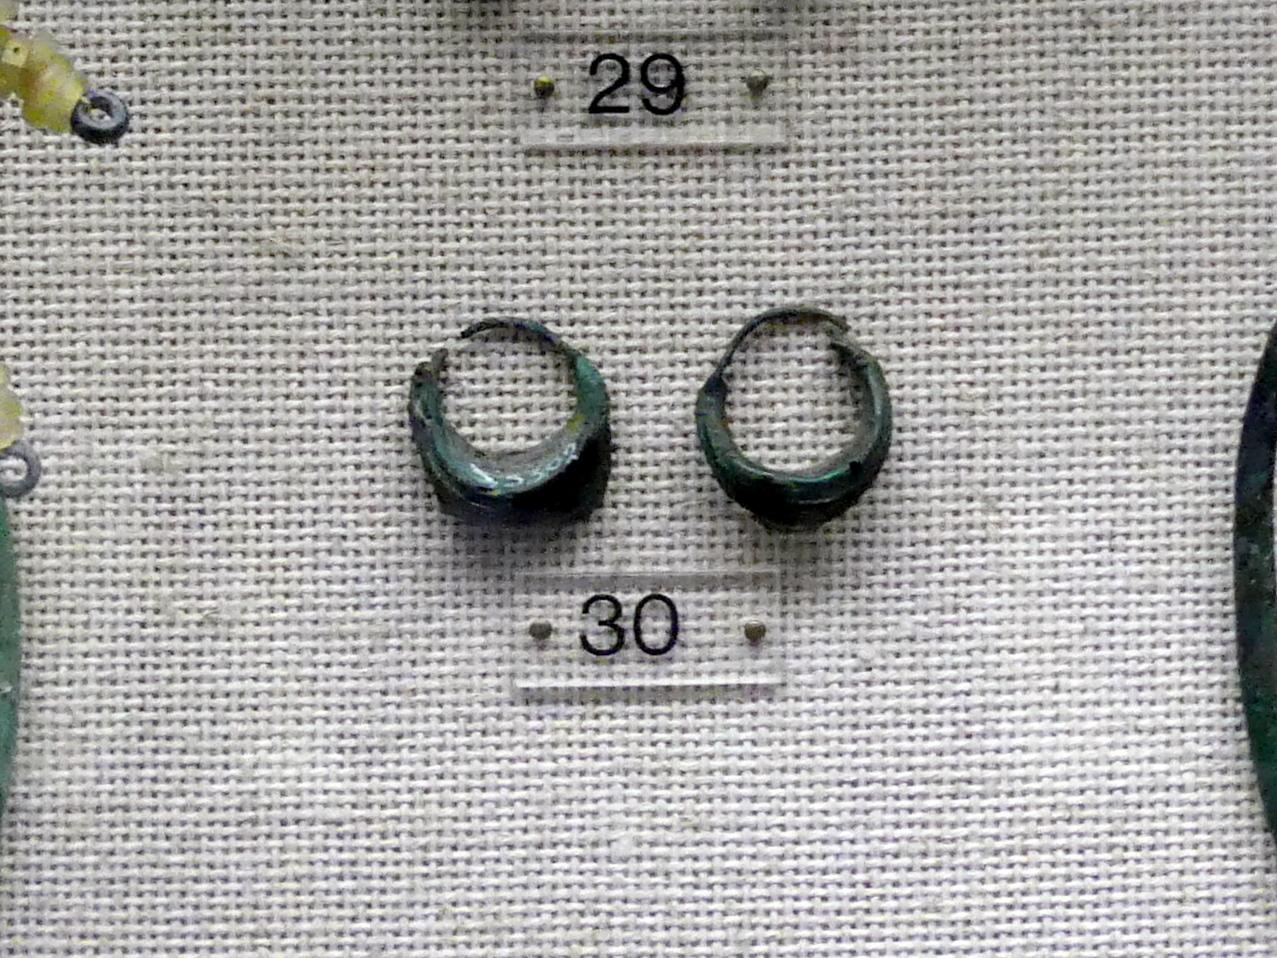 Ohrringpaar, Hallstattzeit, 700 - 200 v. Chr., Bild 1/2